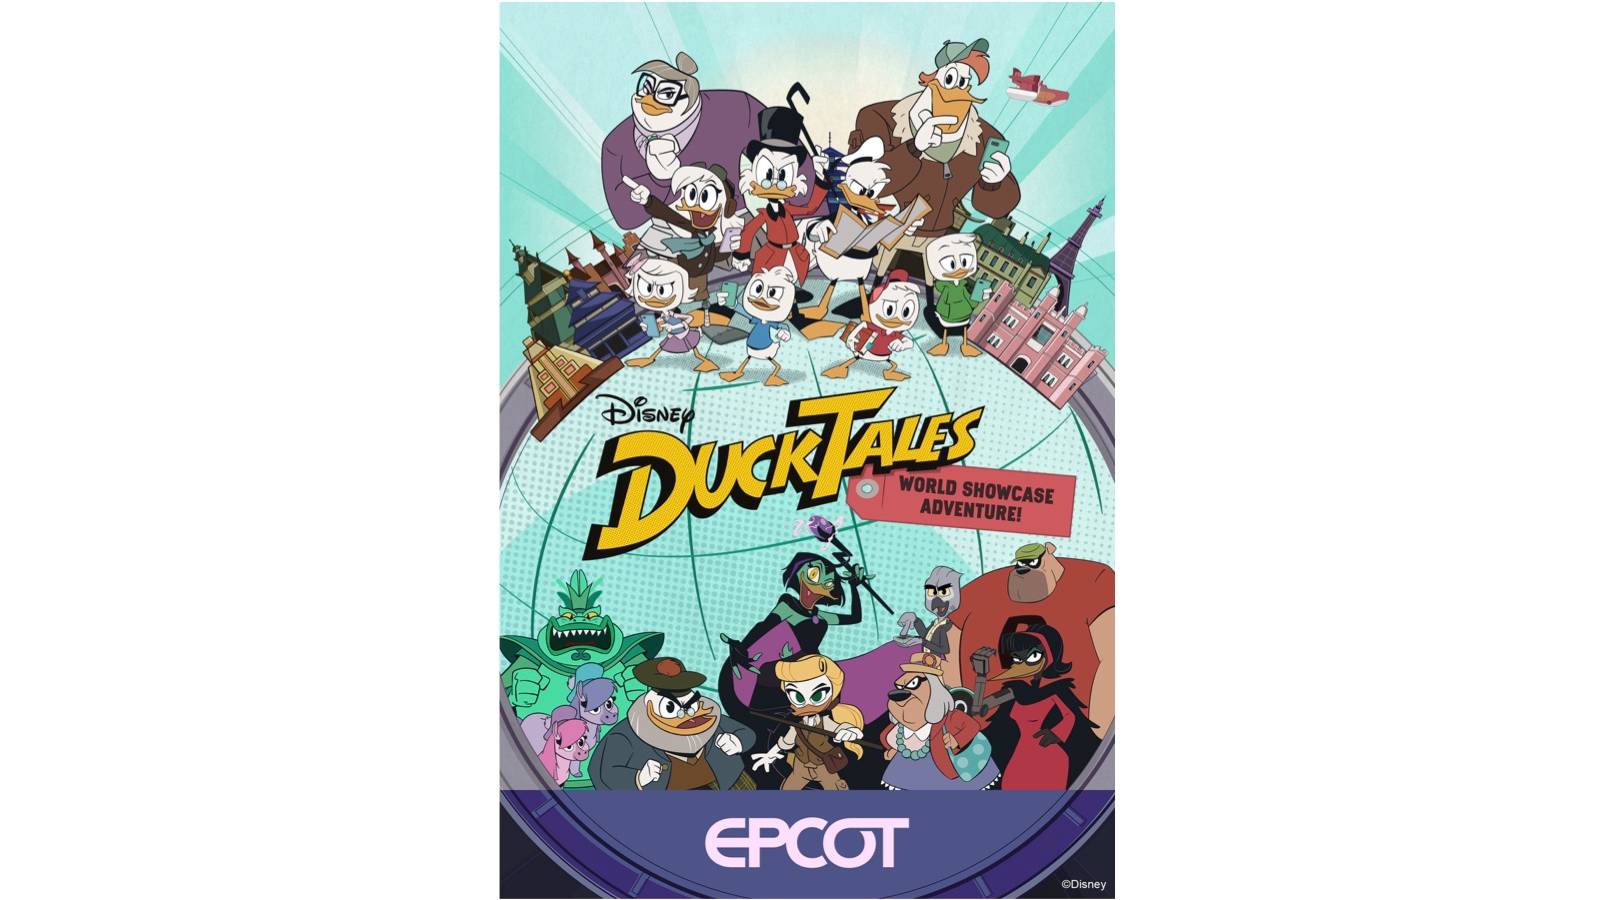 Disney's DuckTales World Showcase Adventure poster